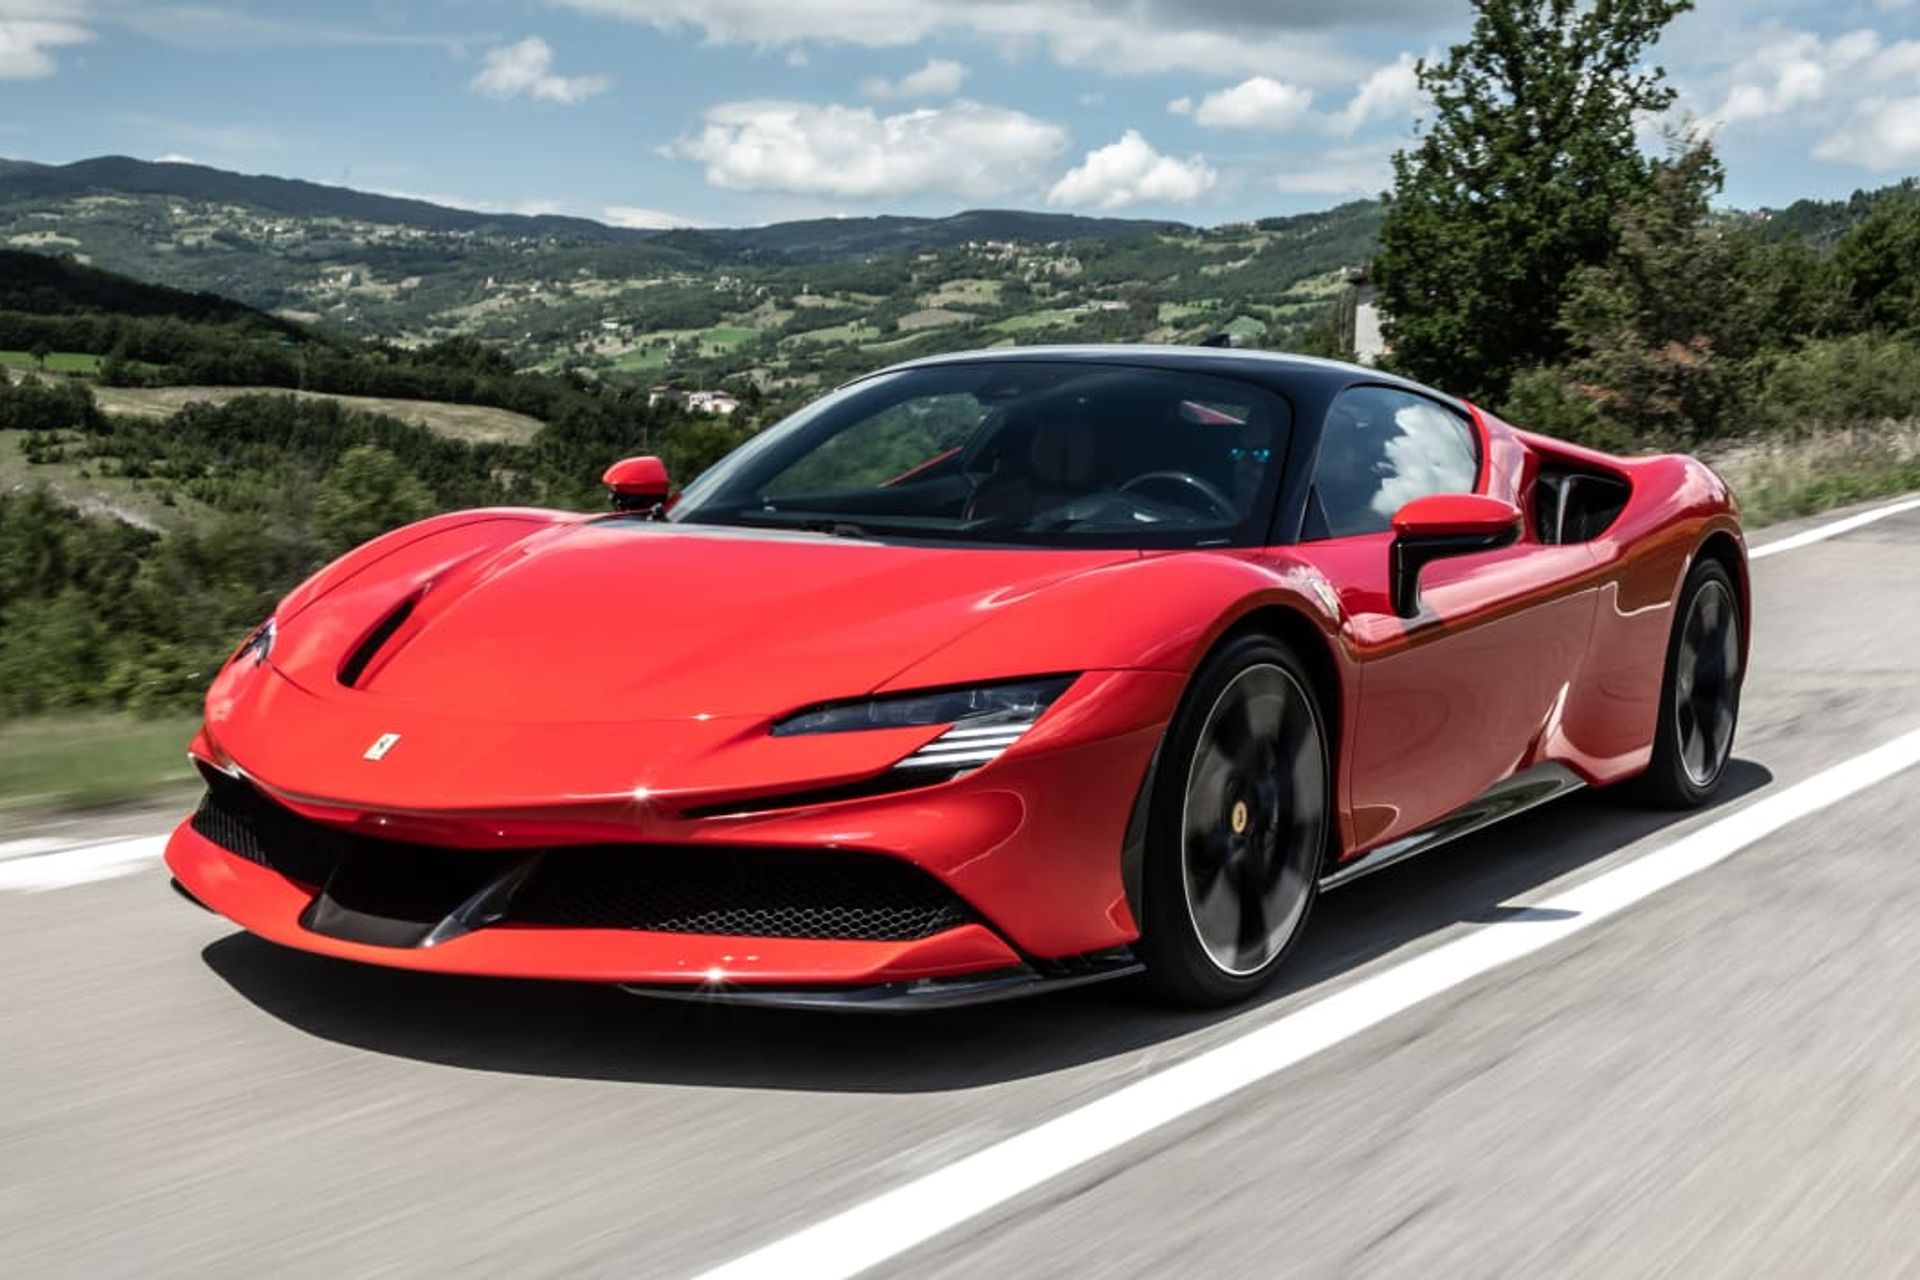 Ferrari boss promises emotional EV, says Teslas are functional cars